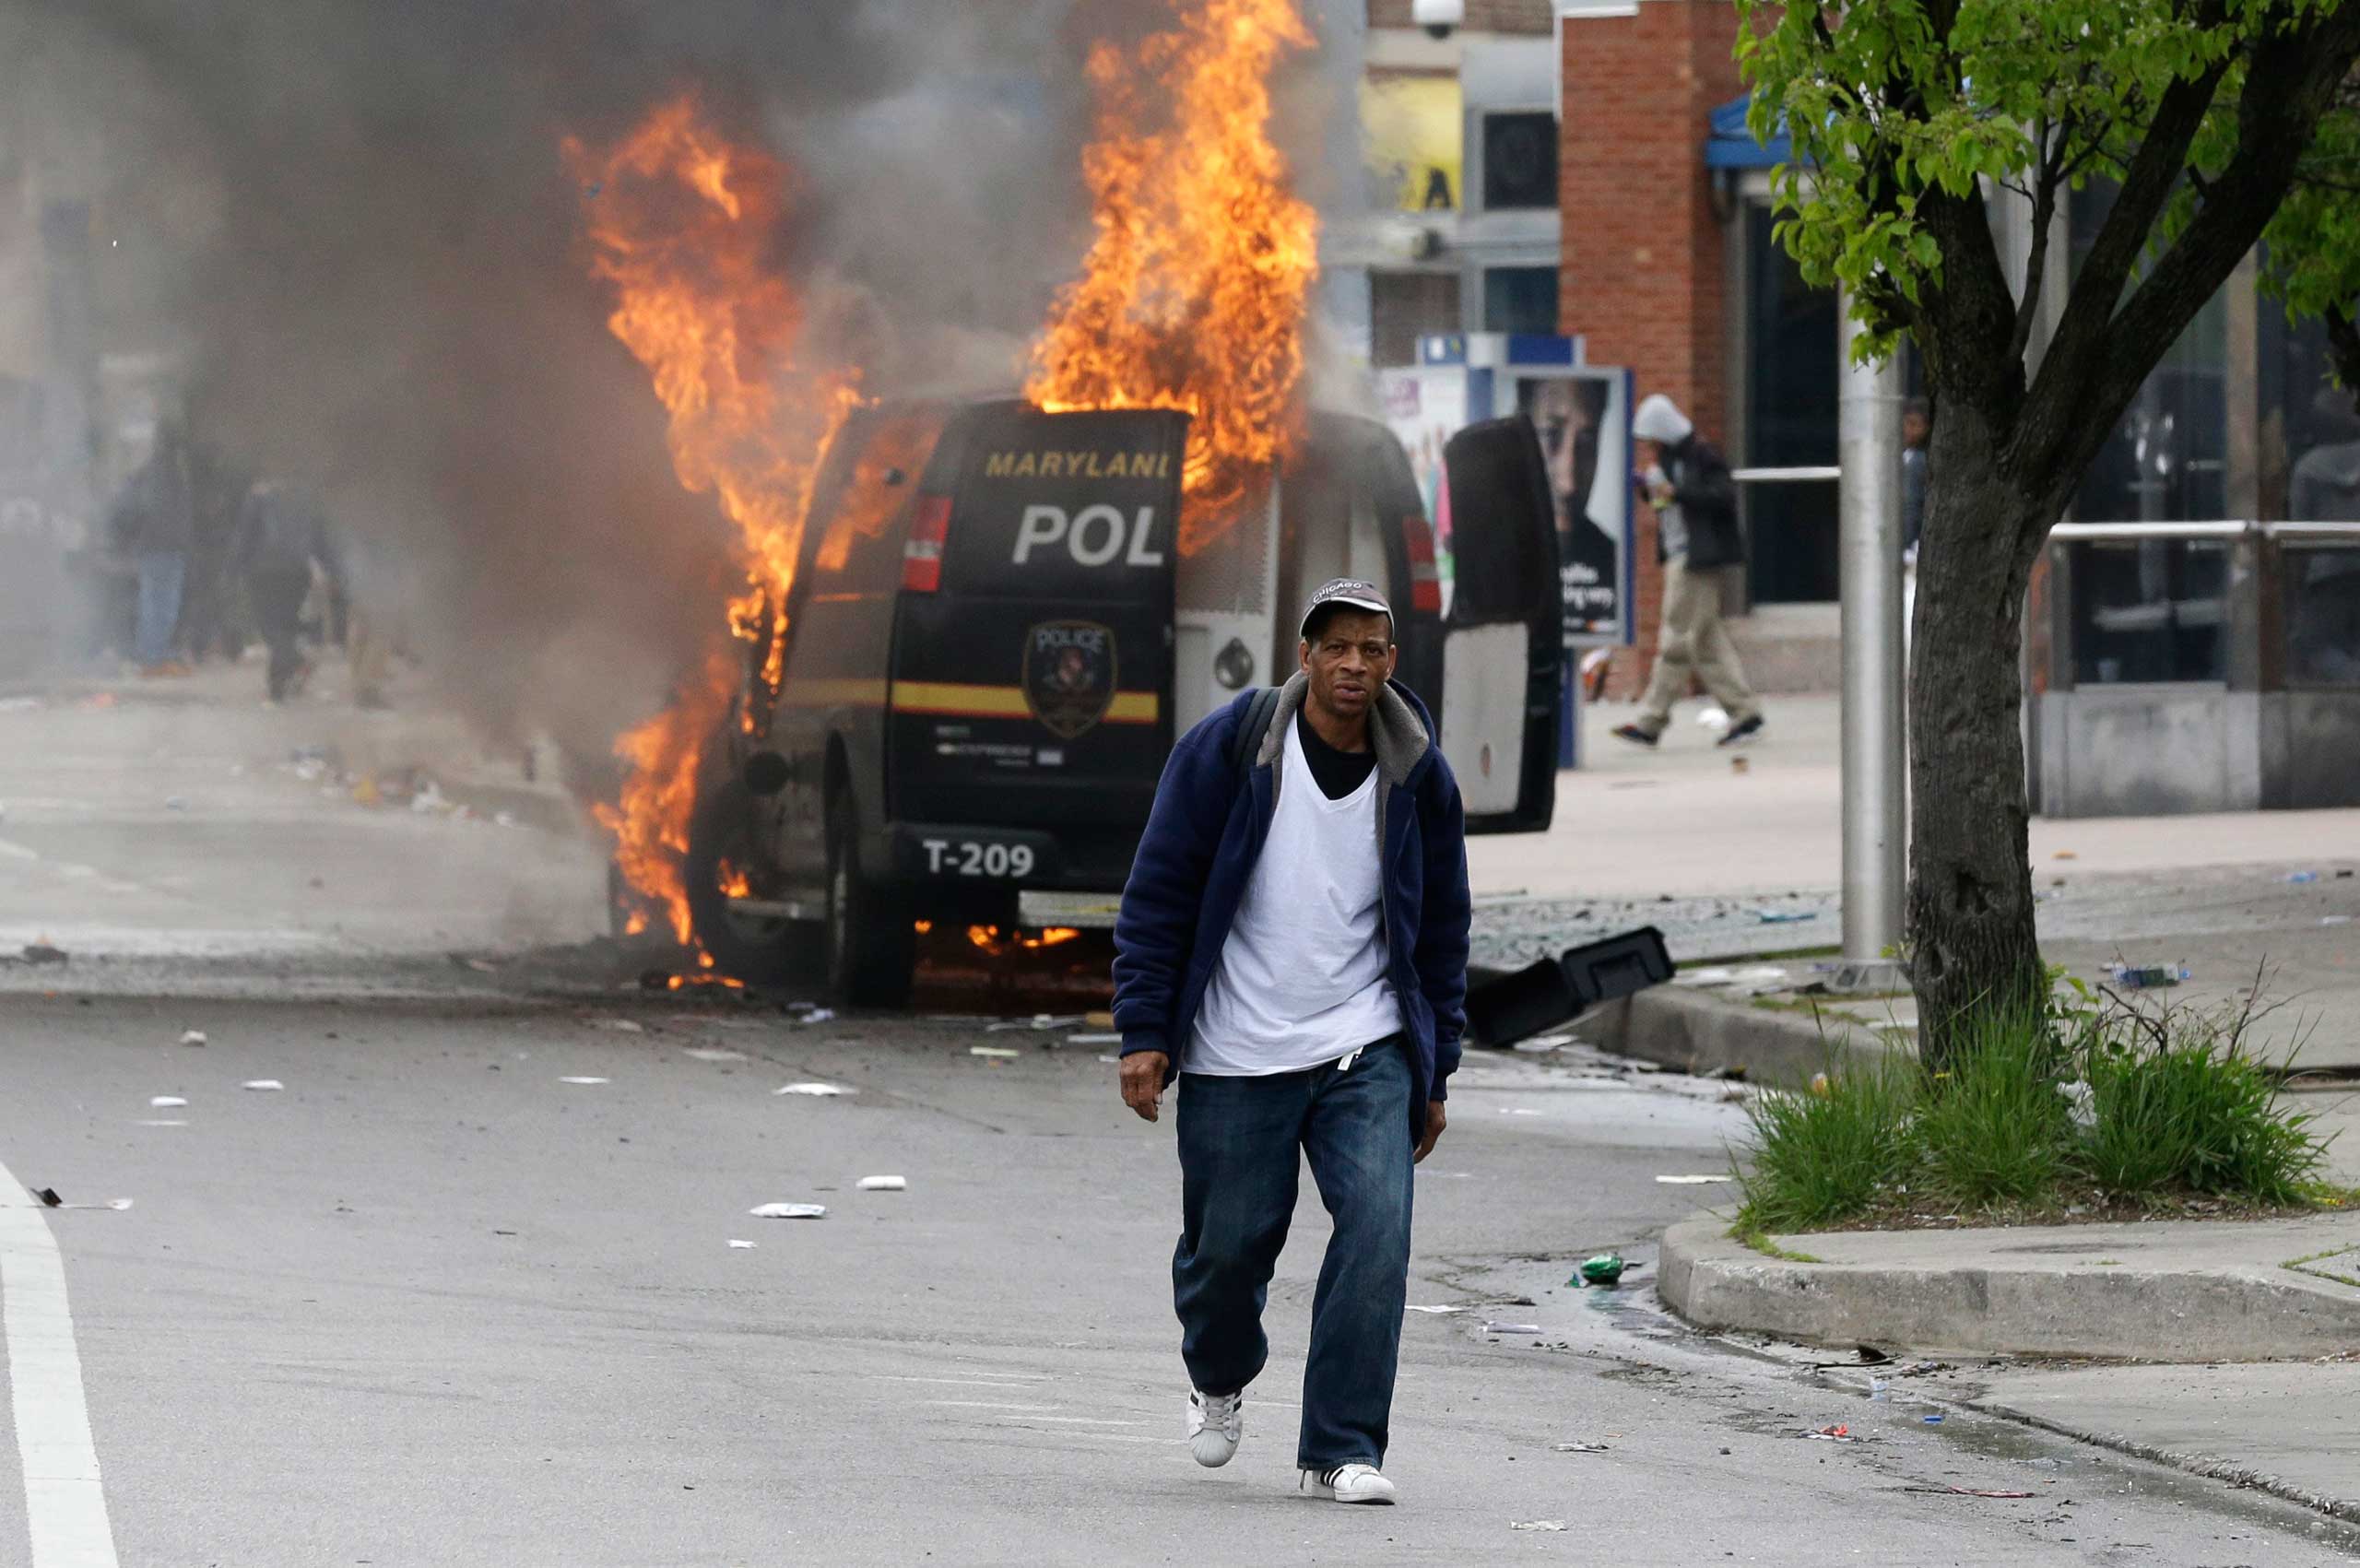 A man walks past a burning police vehicle in Baltimore on April 27, 2015. (Patrick Semansky—AP)